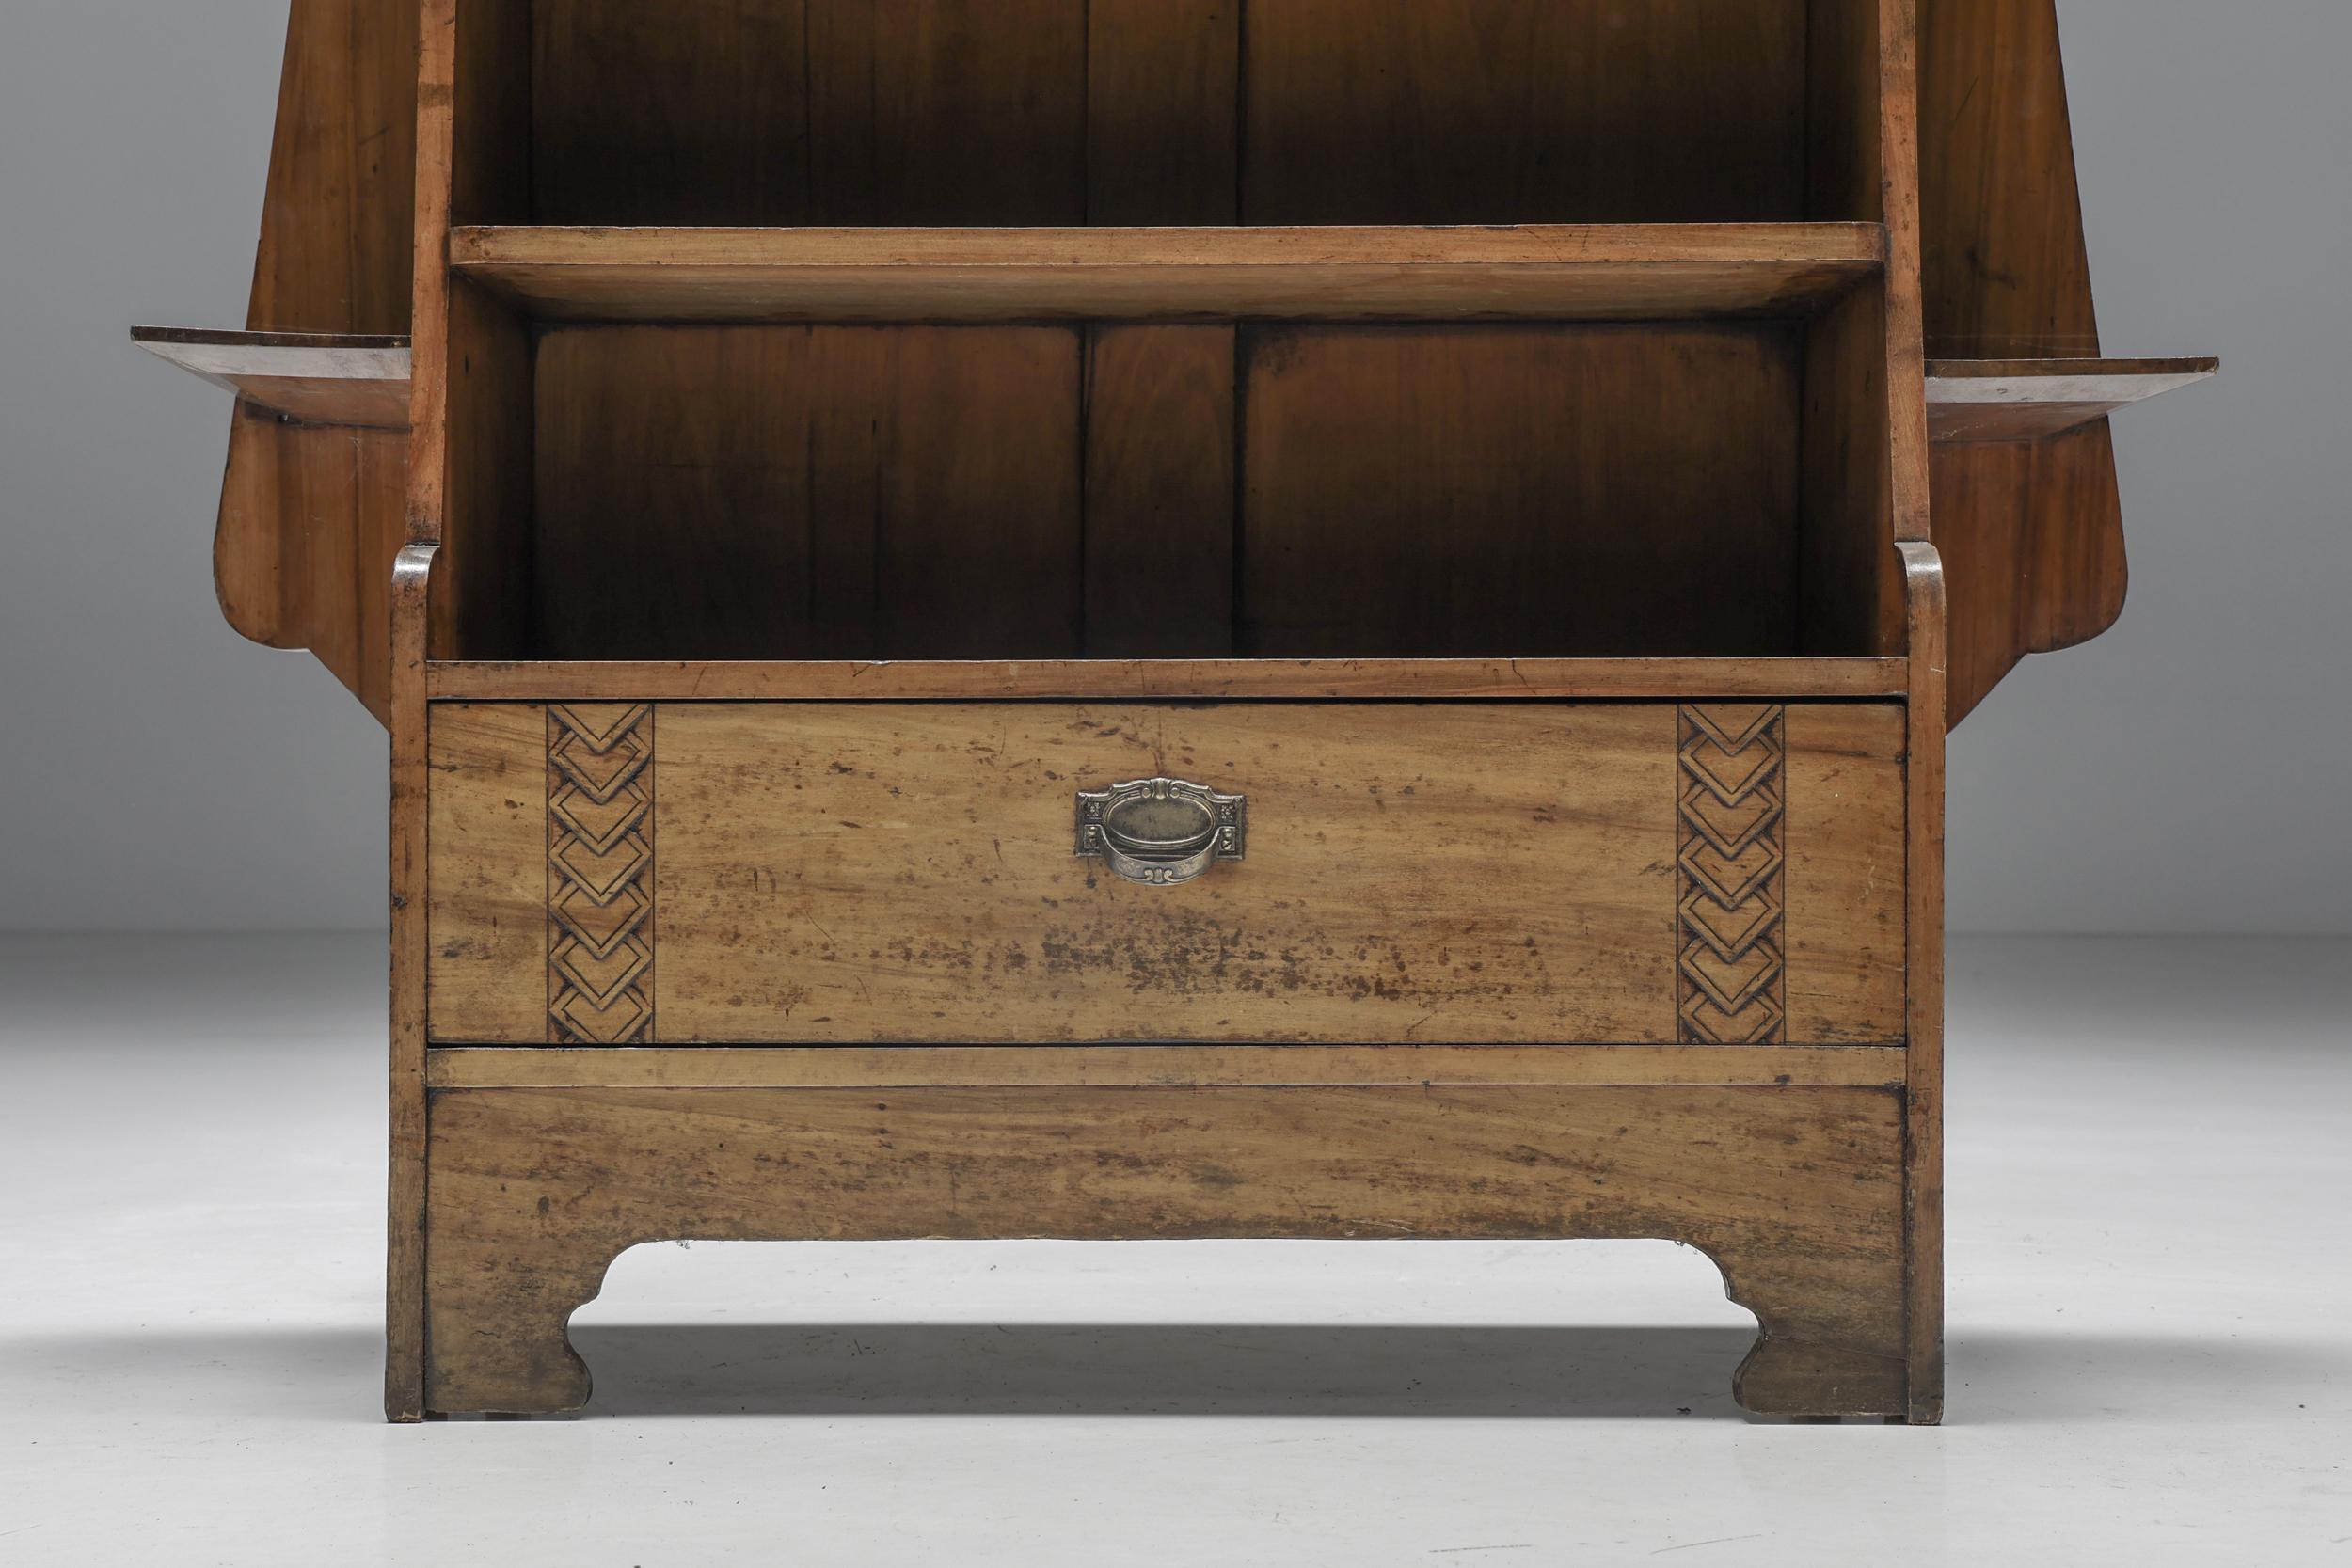 Scottish Arts & Crafts Cupboard in Wood by Charles Rennie Mackintosh, 20th Century For Sale